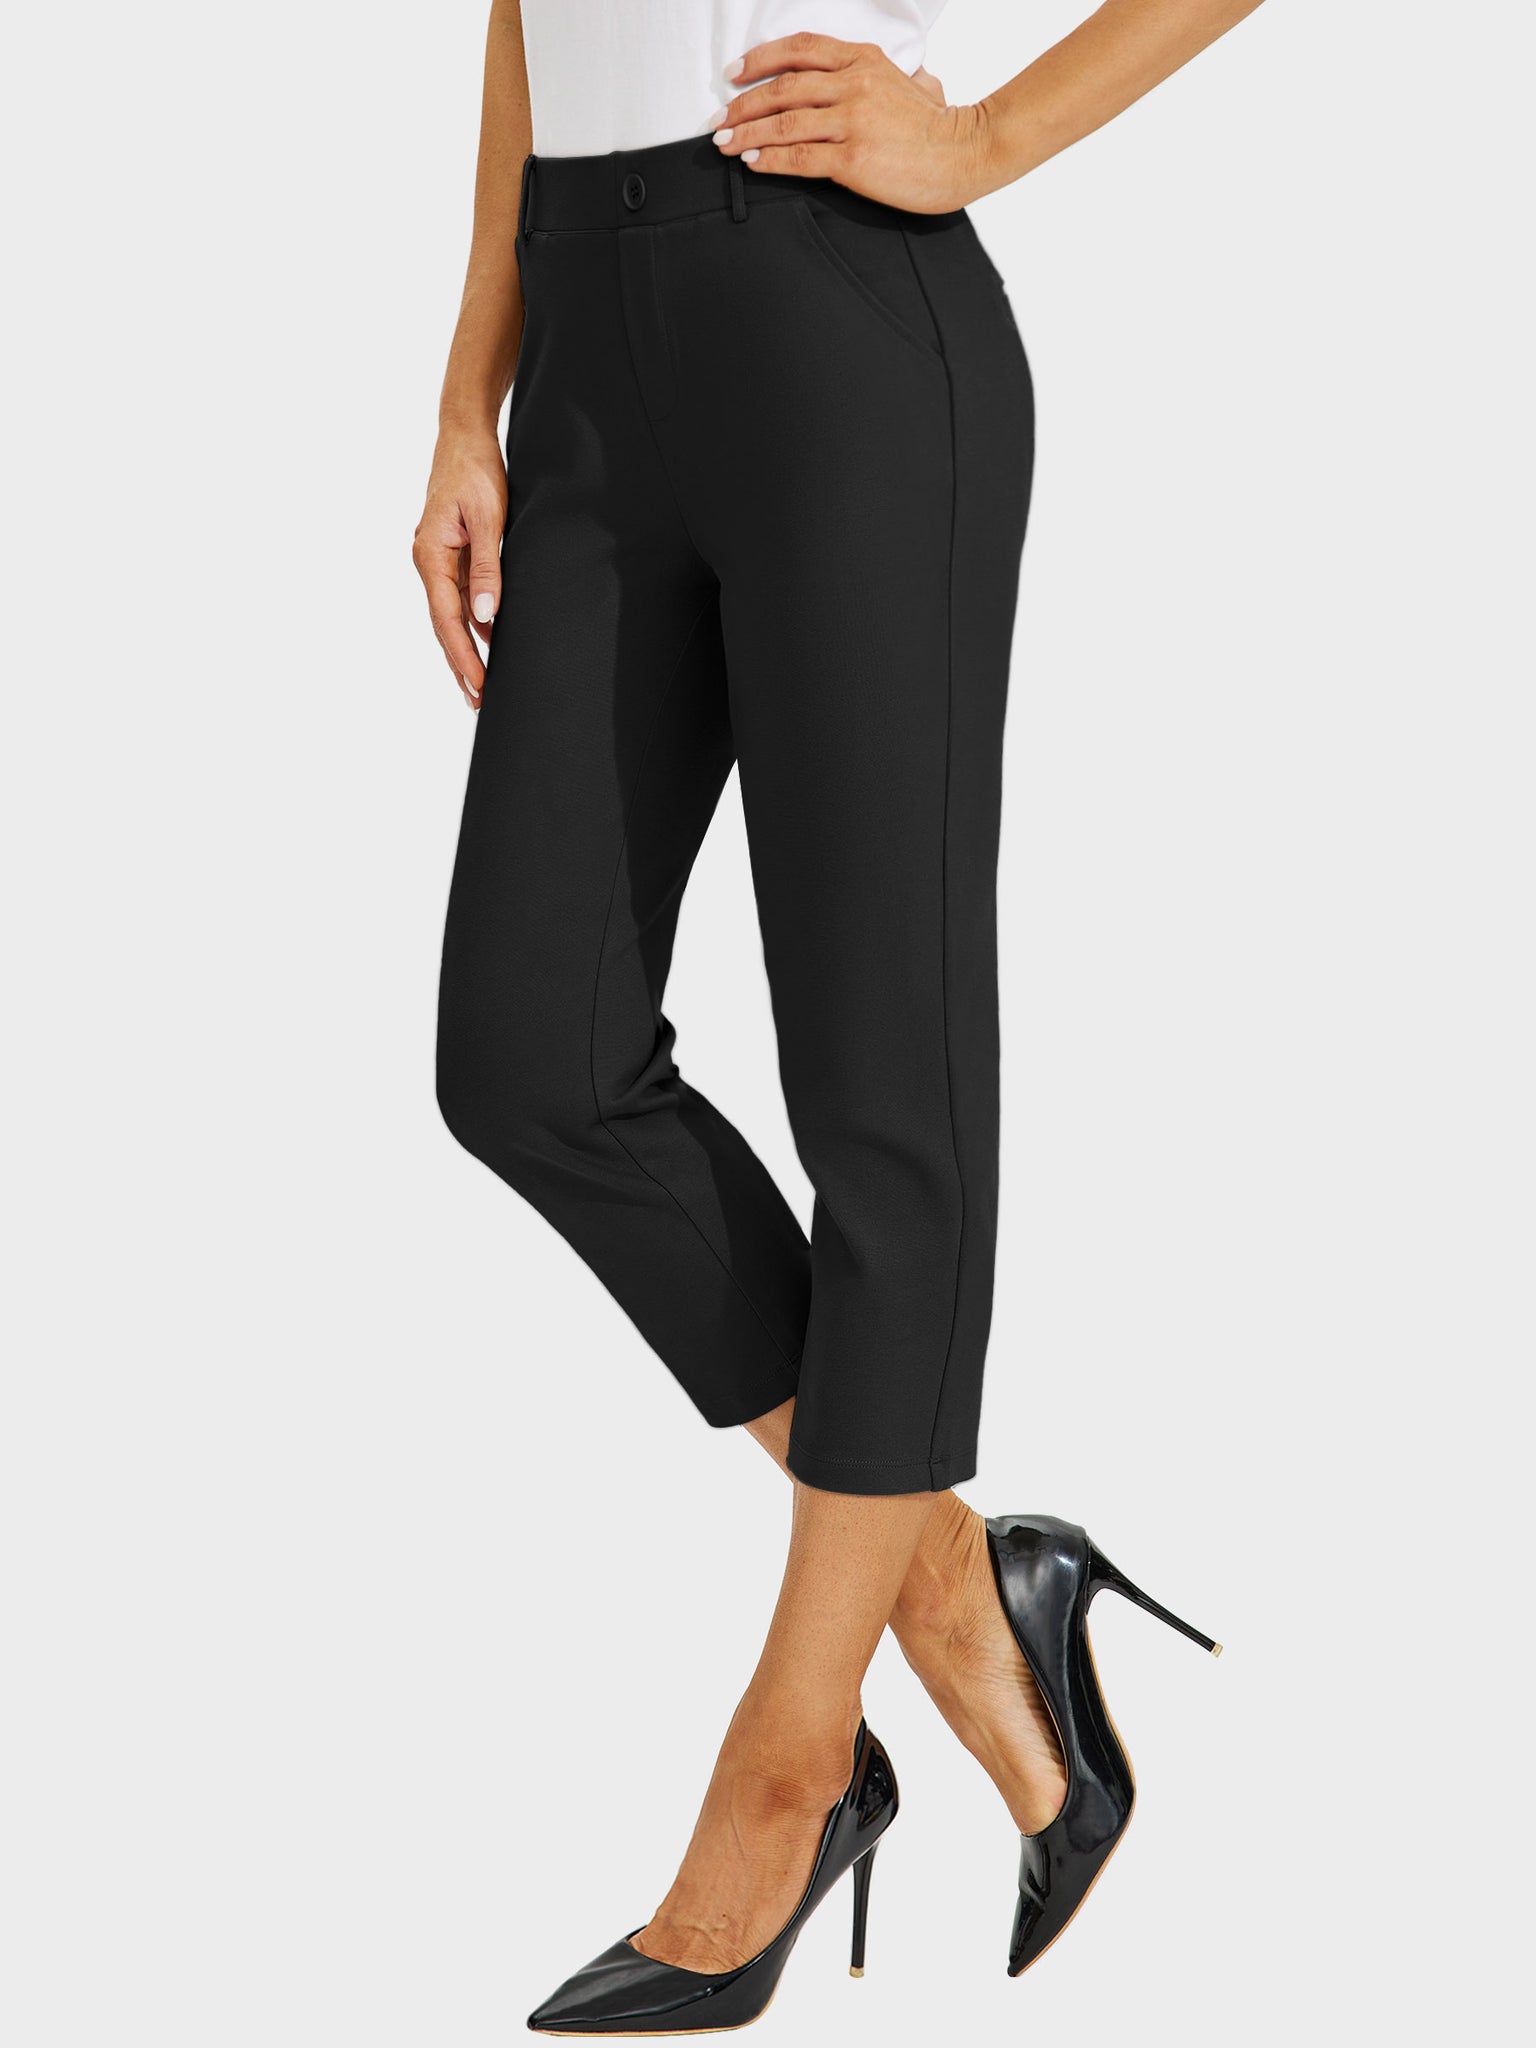 Women's Stretch Capri Yoga Dress Pants_Black_model1